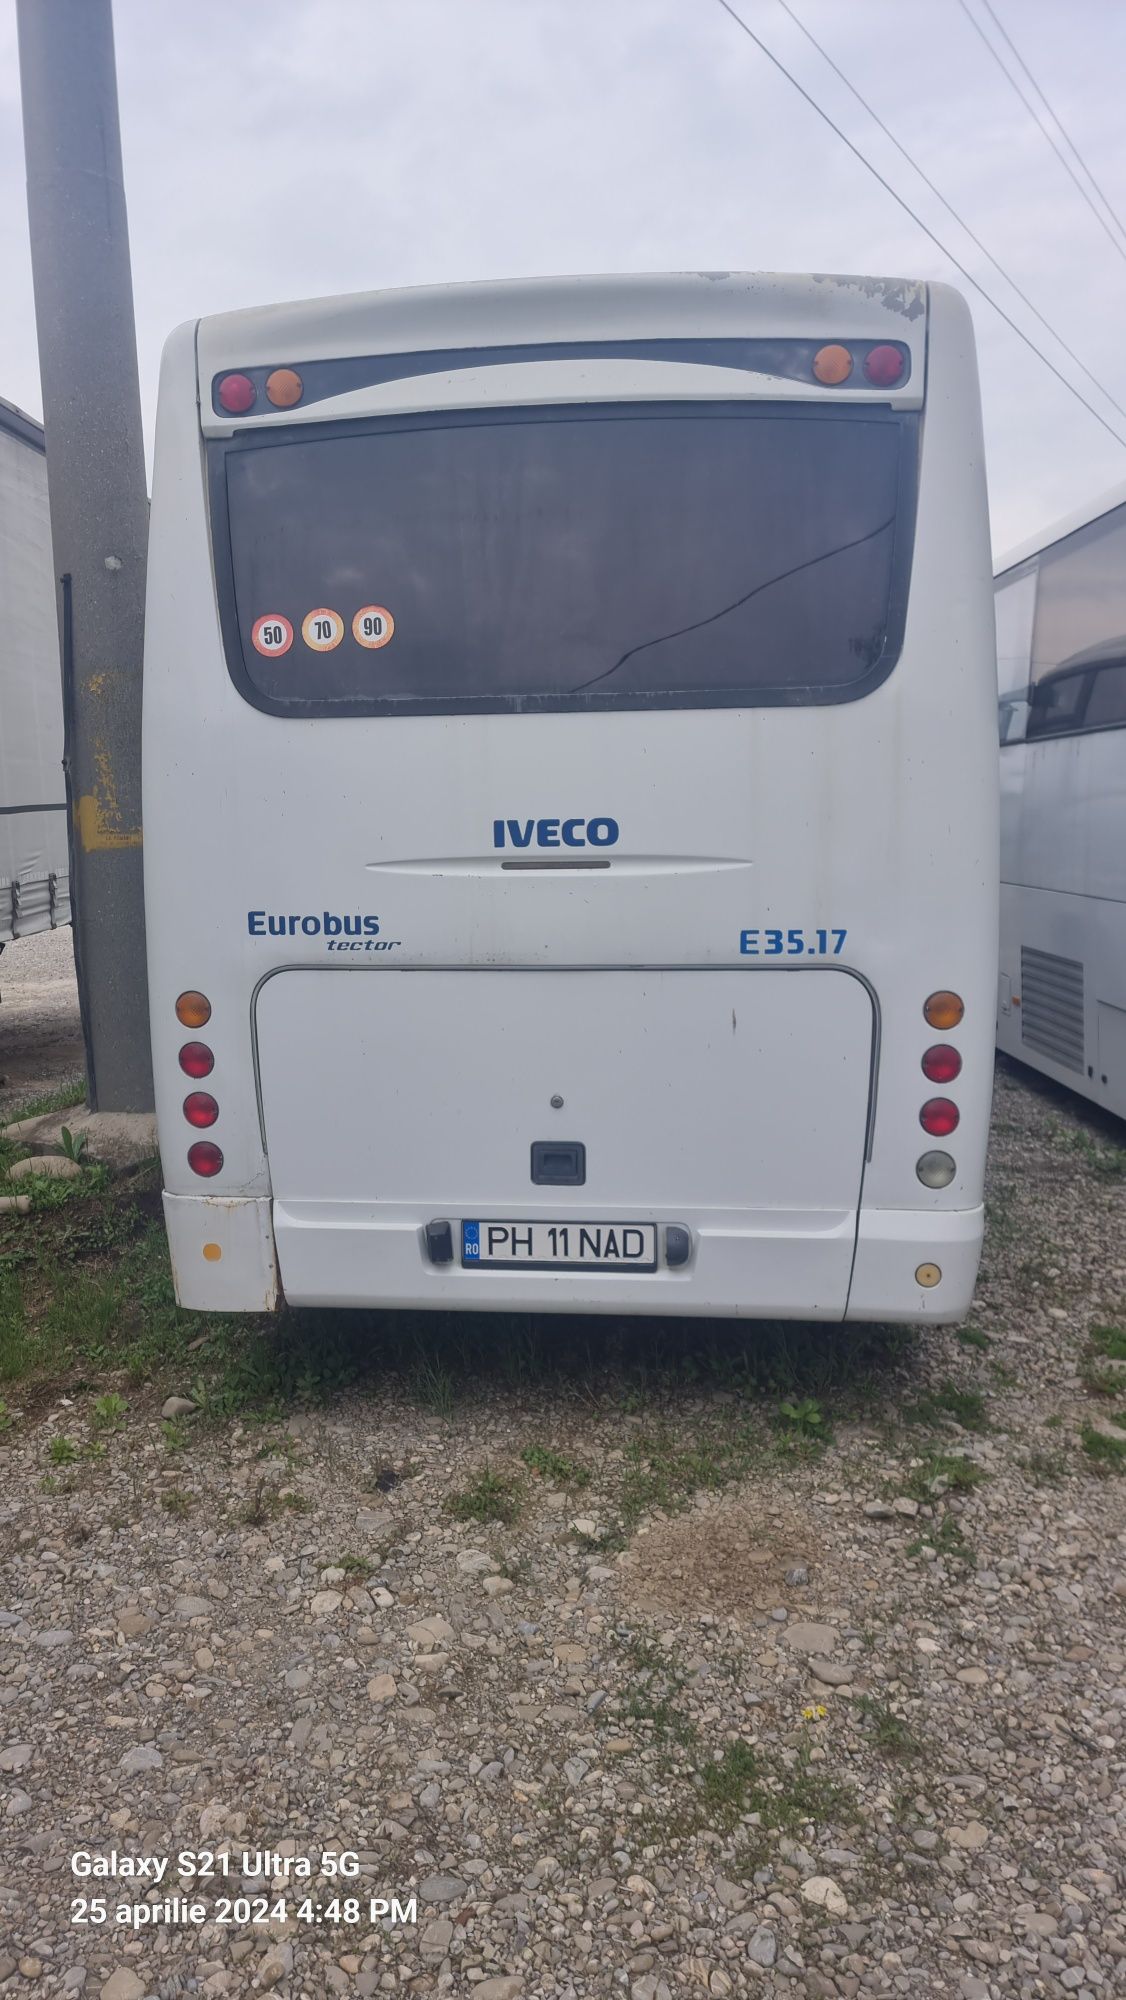 Vând Iveco eurobus